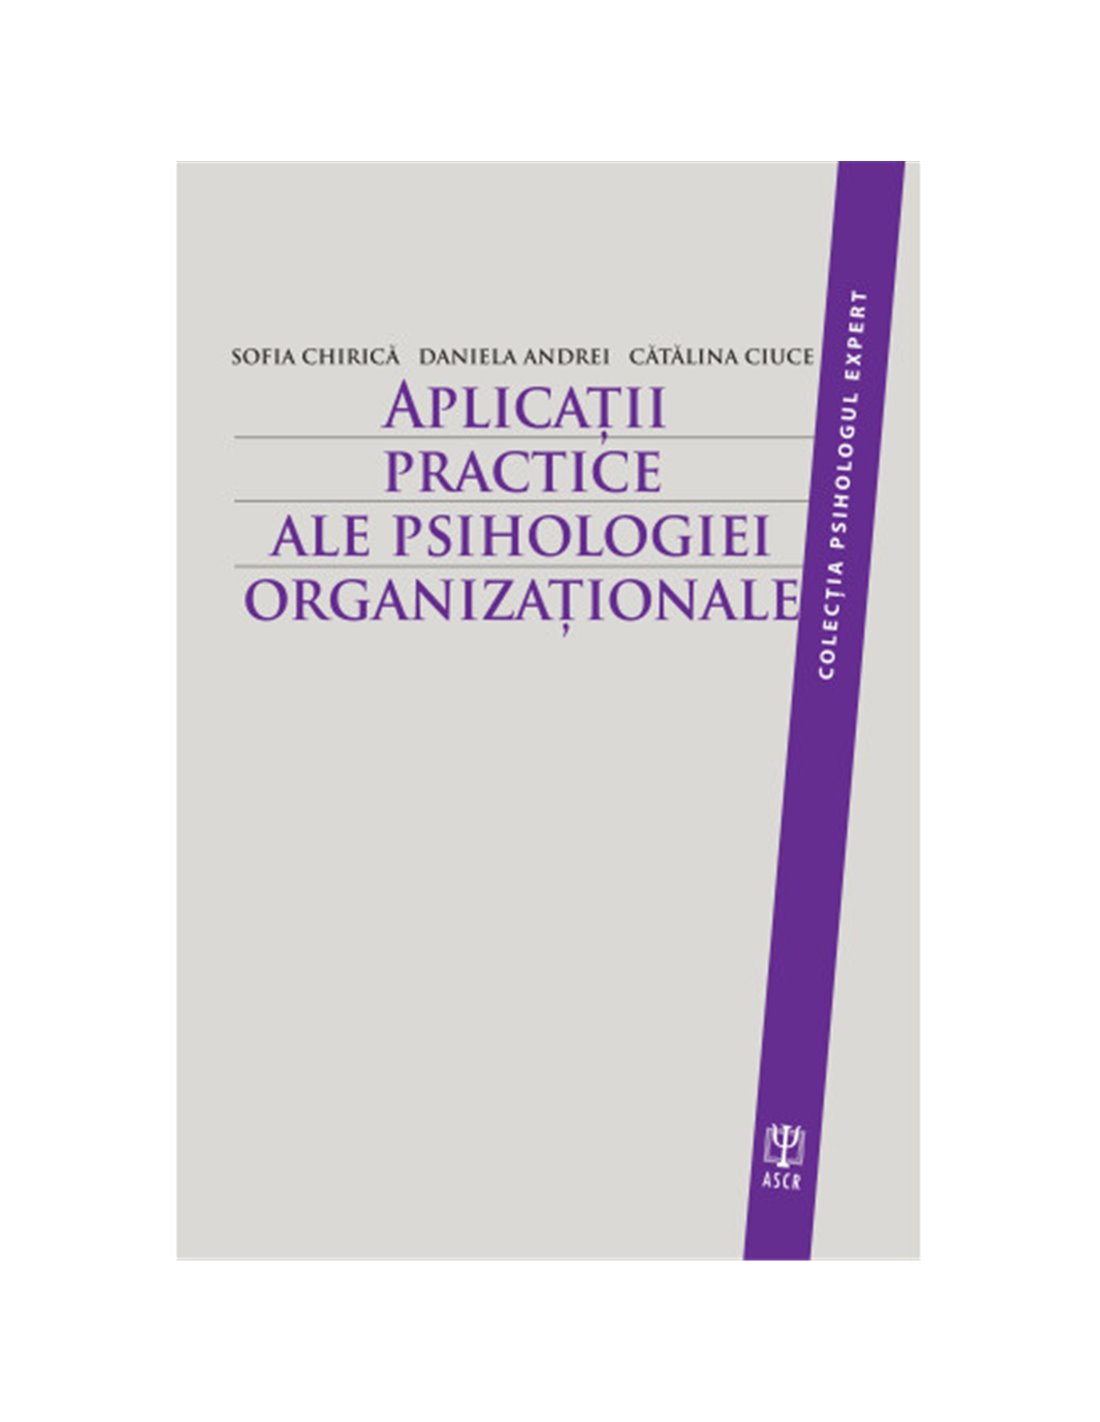 Aplicatii practice ale psihologiei organizationale - Sofia Chirica, Daniela Andrei, Catalina Ciuce |  ASCRED